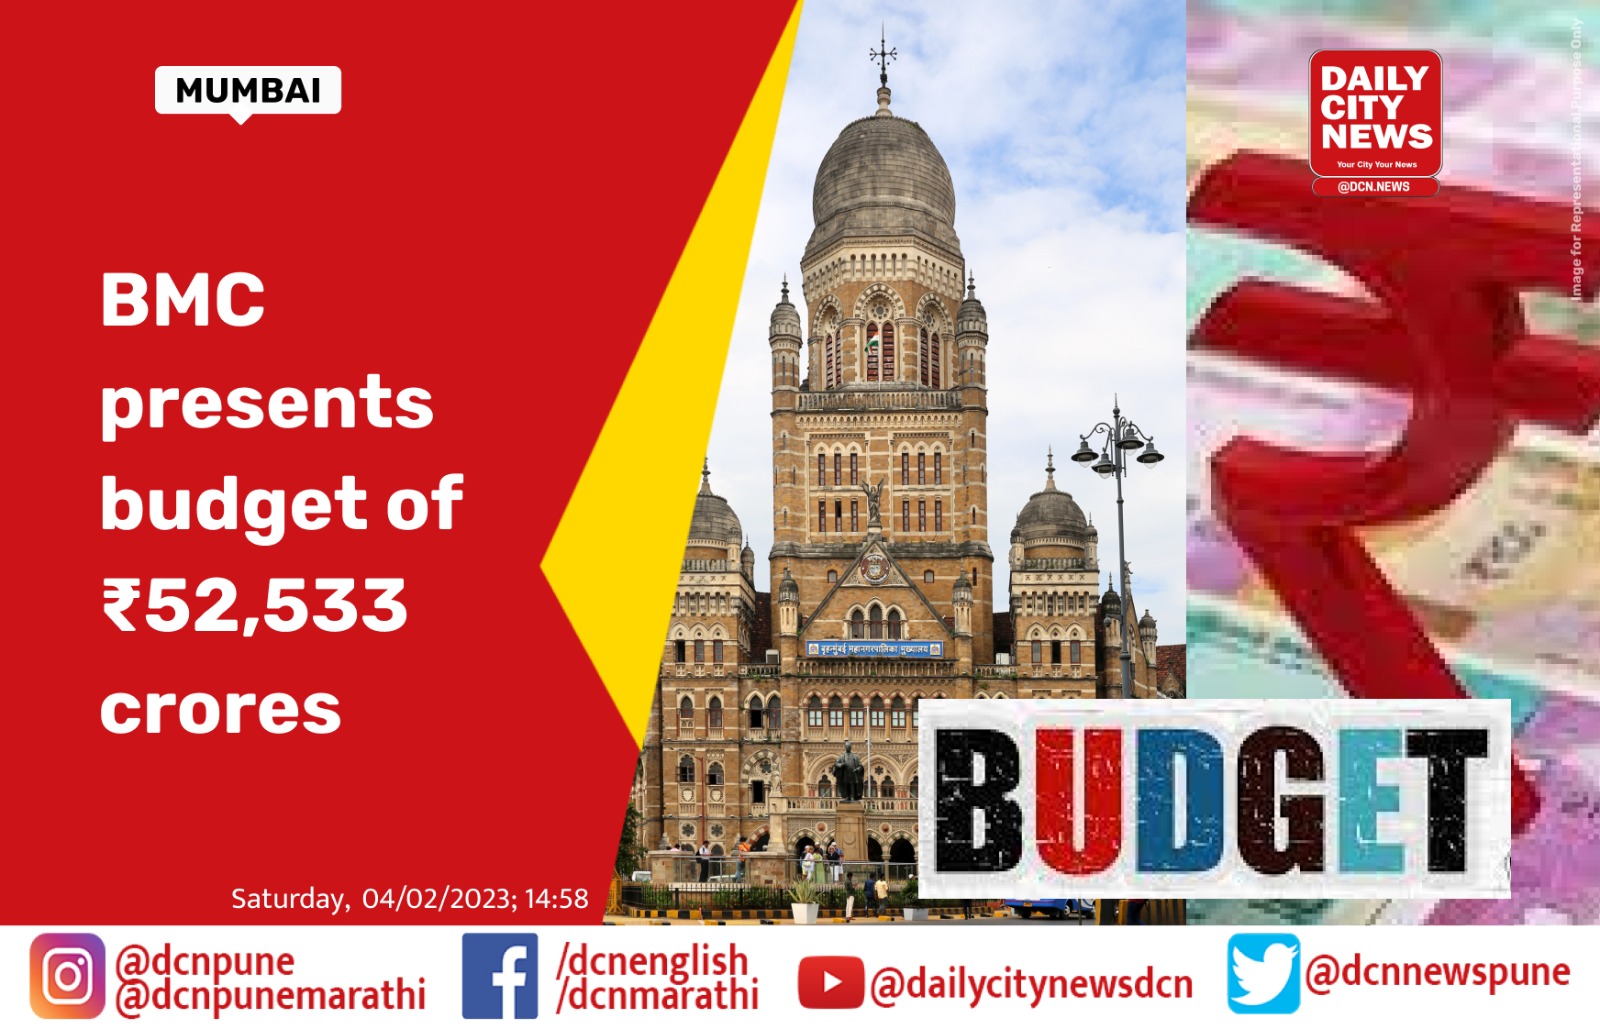 BMC presents budget of ₹52,533 crores